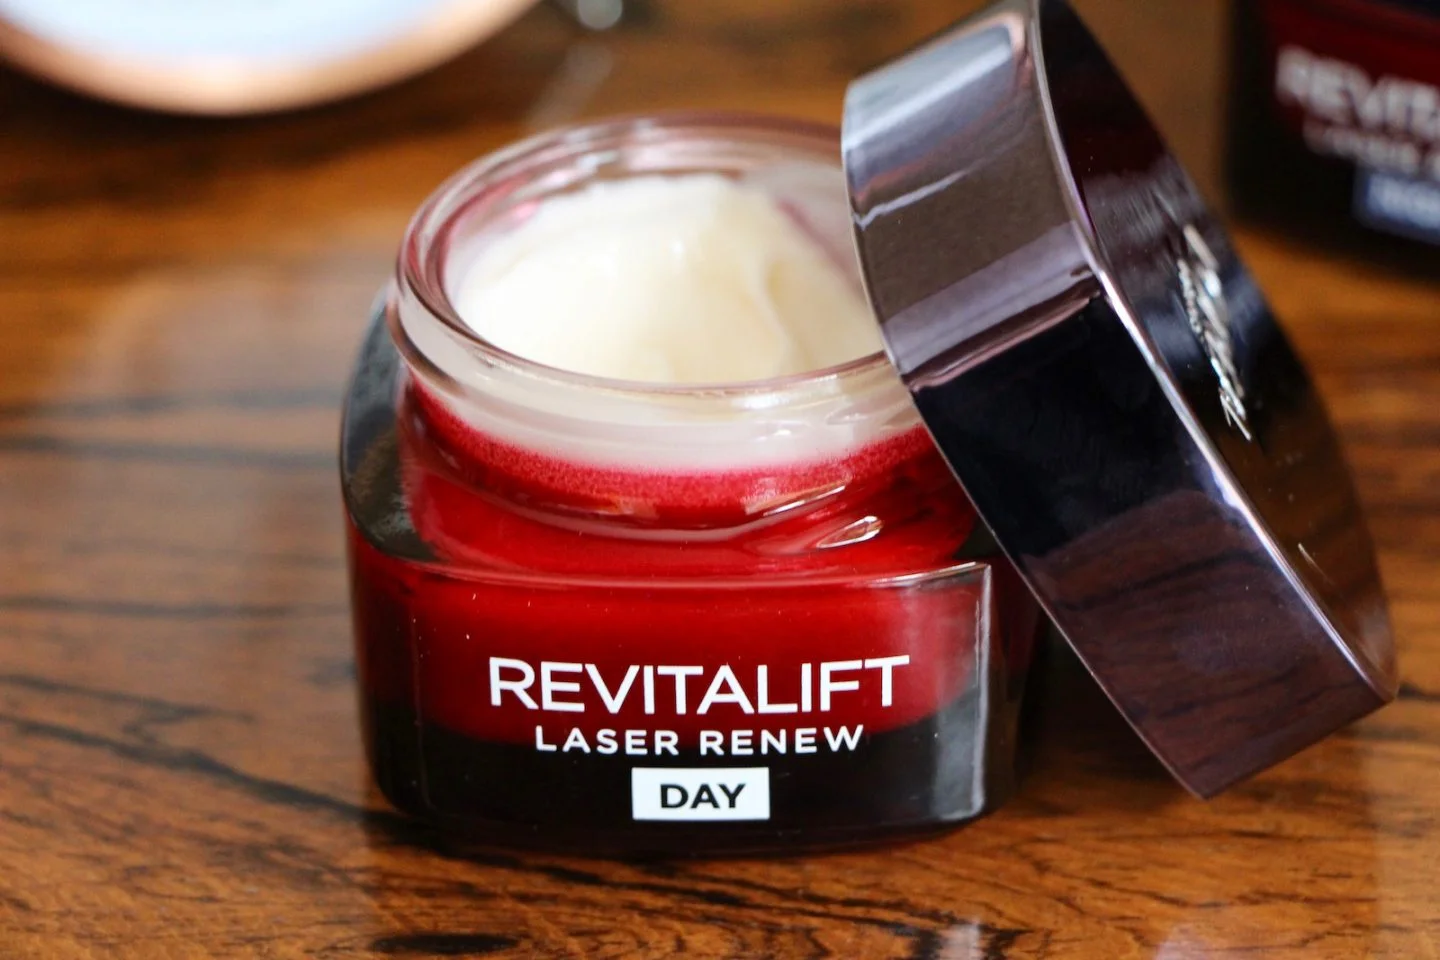 L'Oreal Paris Revitalift Laser Renew Day Cream Review